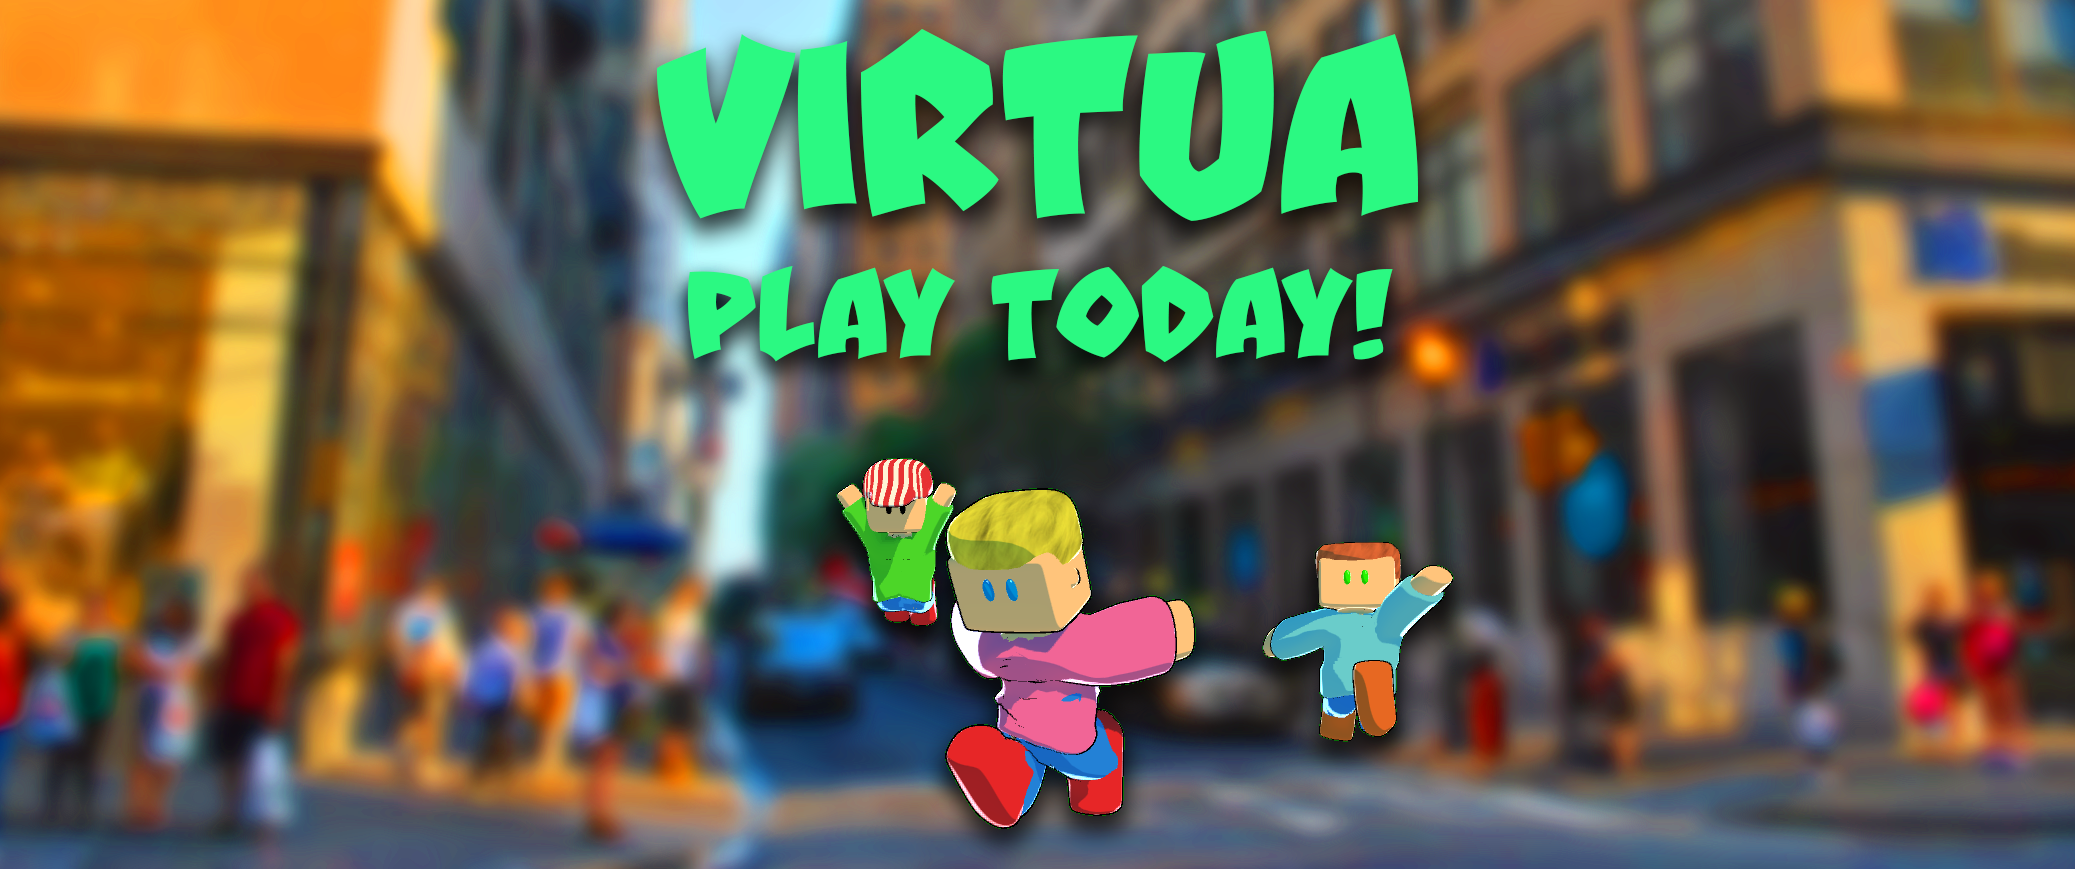 Virtua, Play Today!